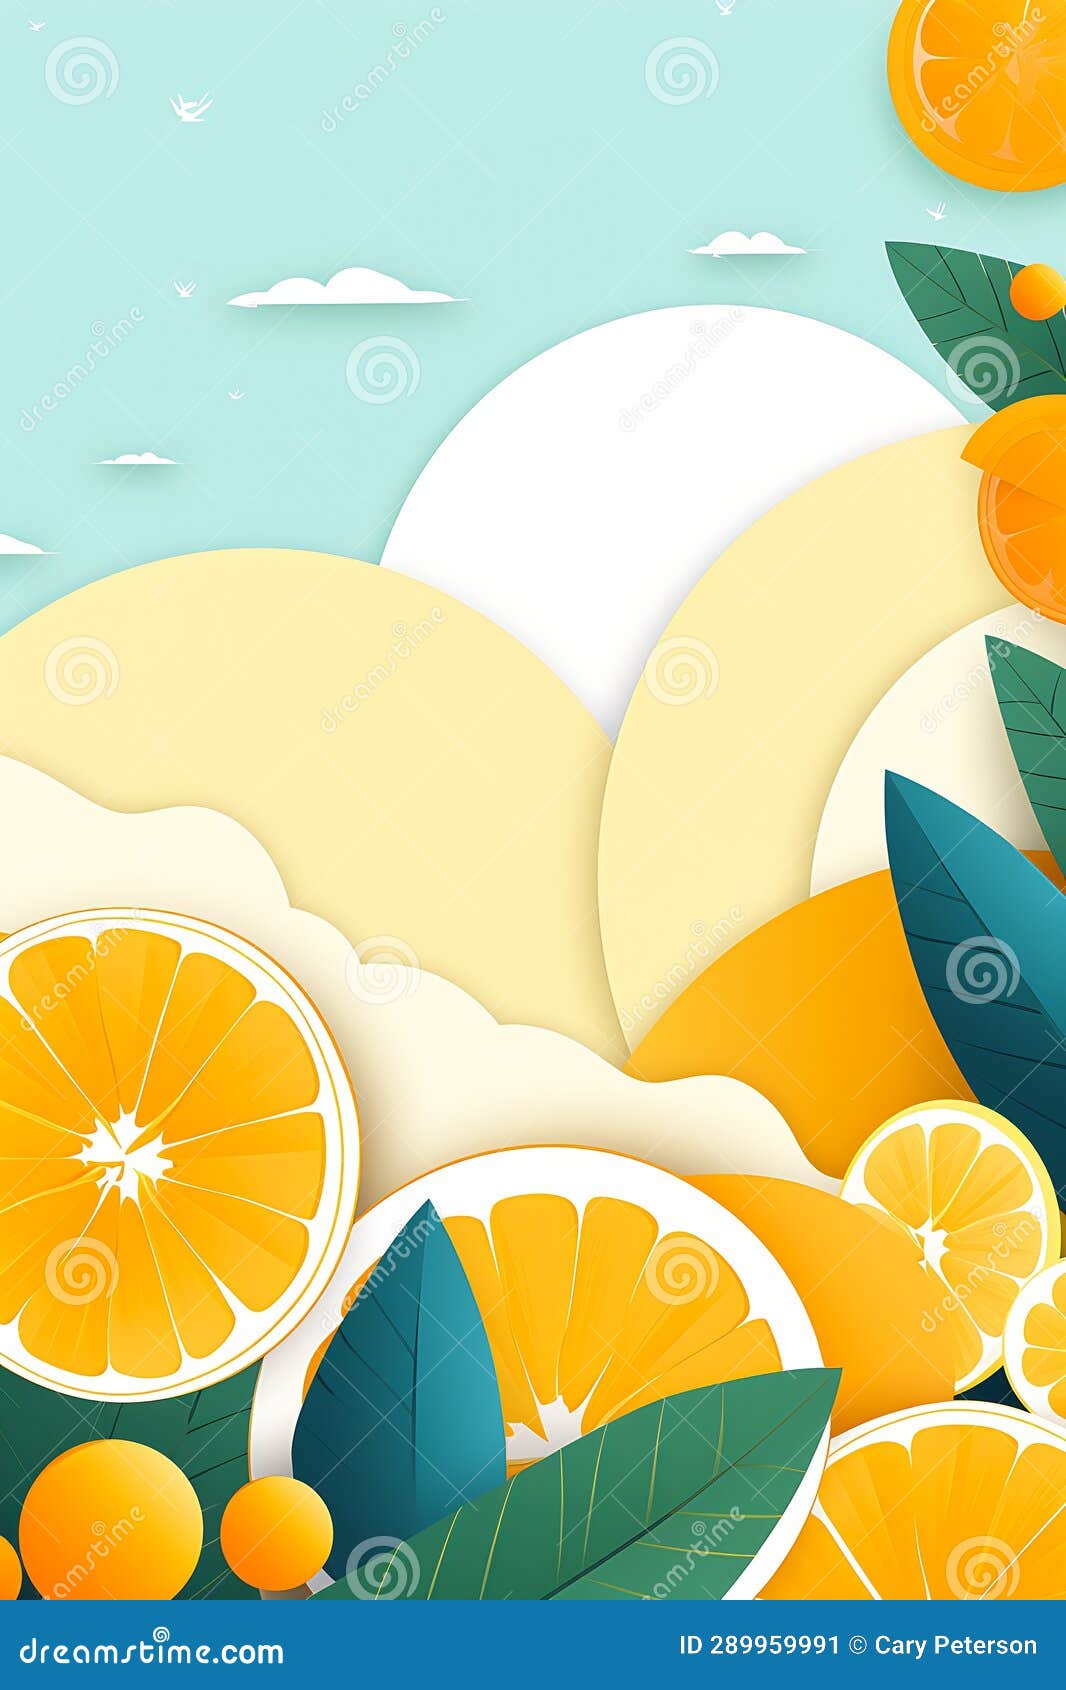 orange you fertile? lemons may help